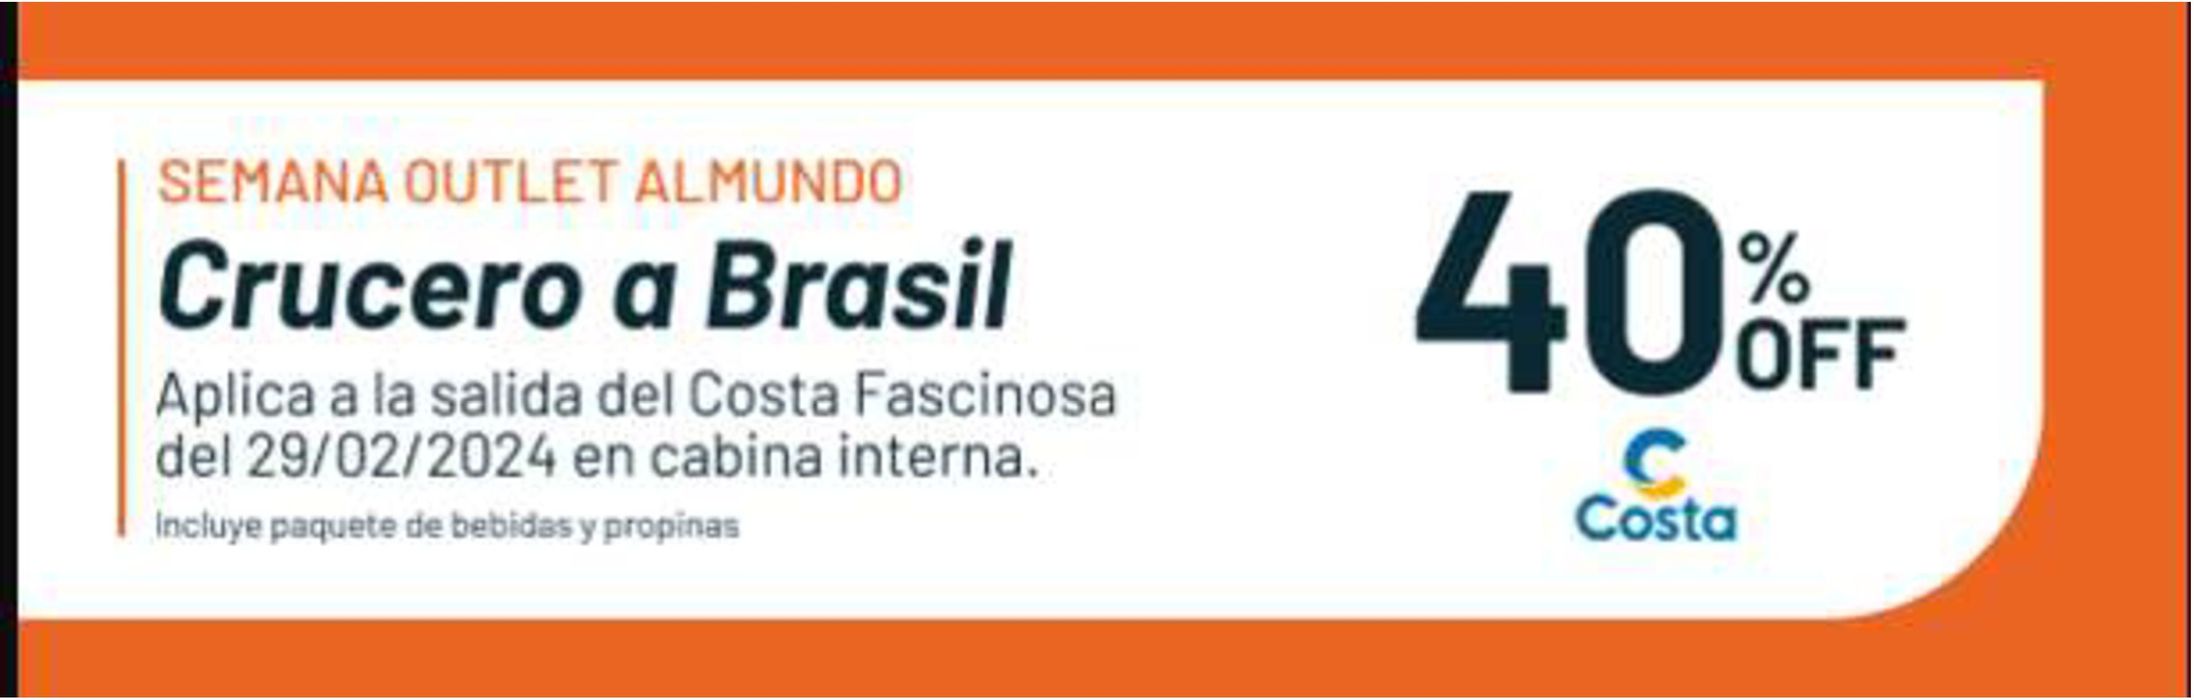 Catálogo Almundo en Santiago del Estero | Crucero a Brasil 40% off | 18/1/2024 - 18/6/2024